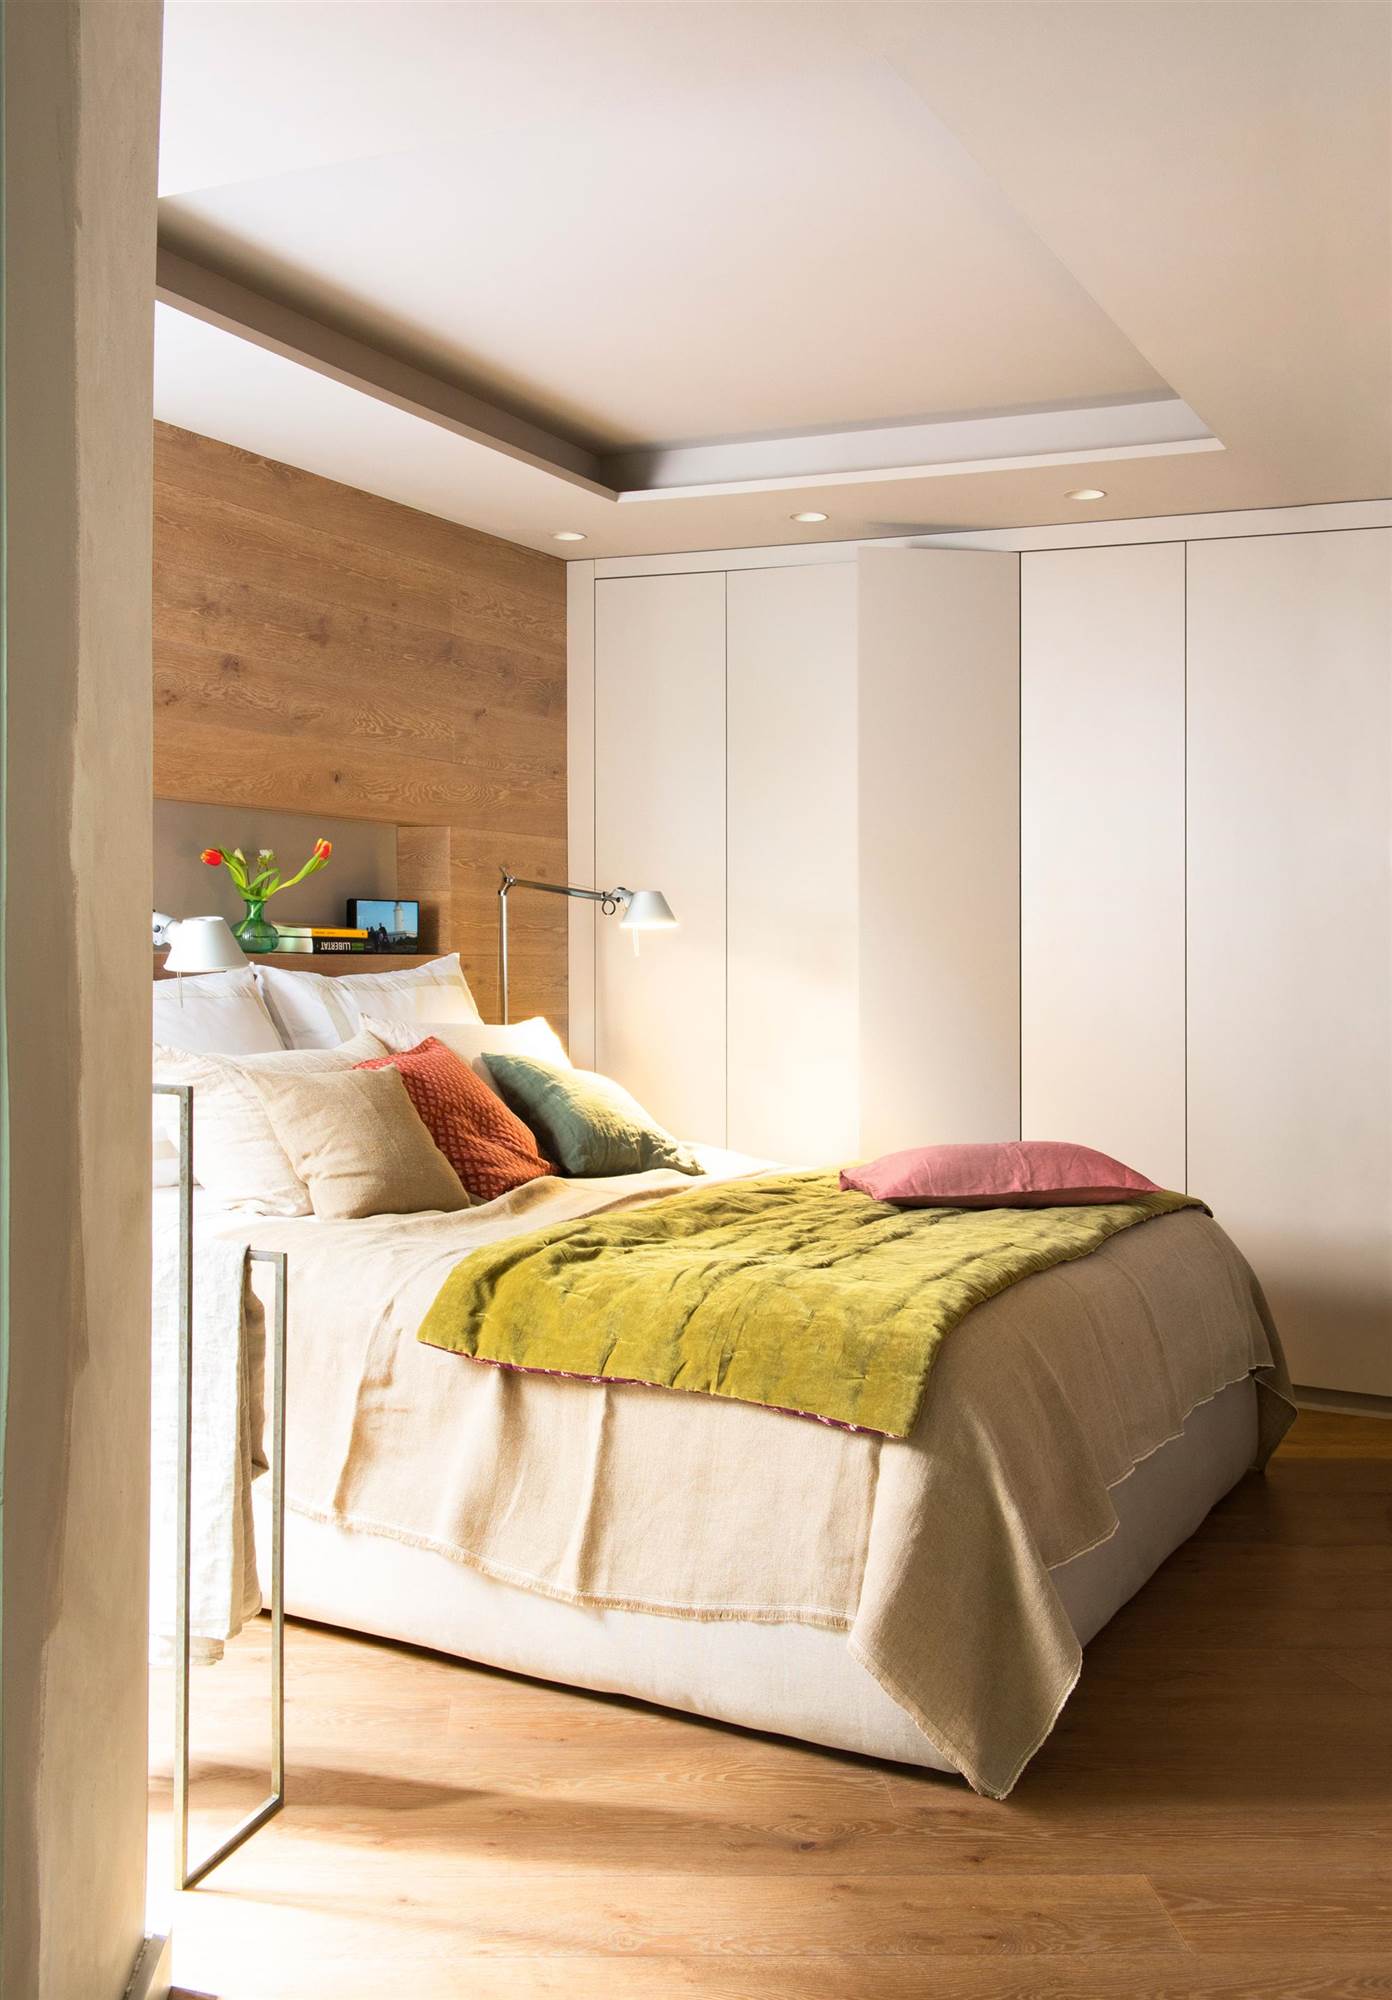 Dormitorio con armario empotrado con frentes lisos